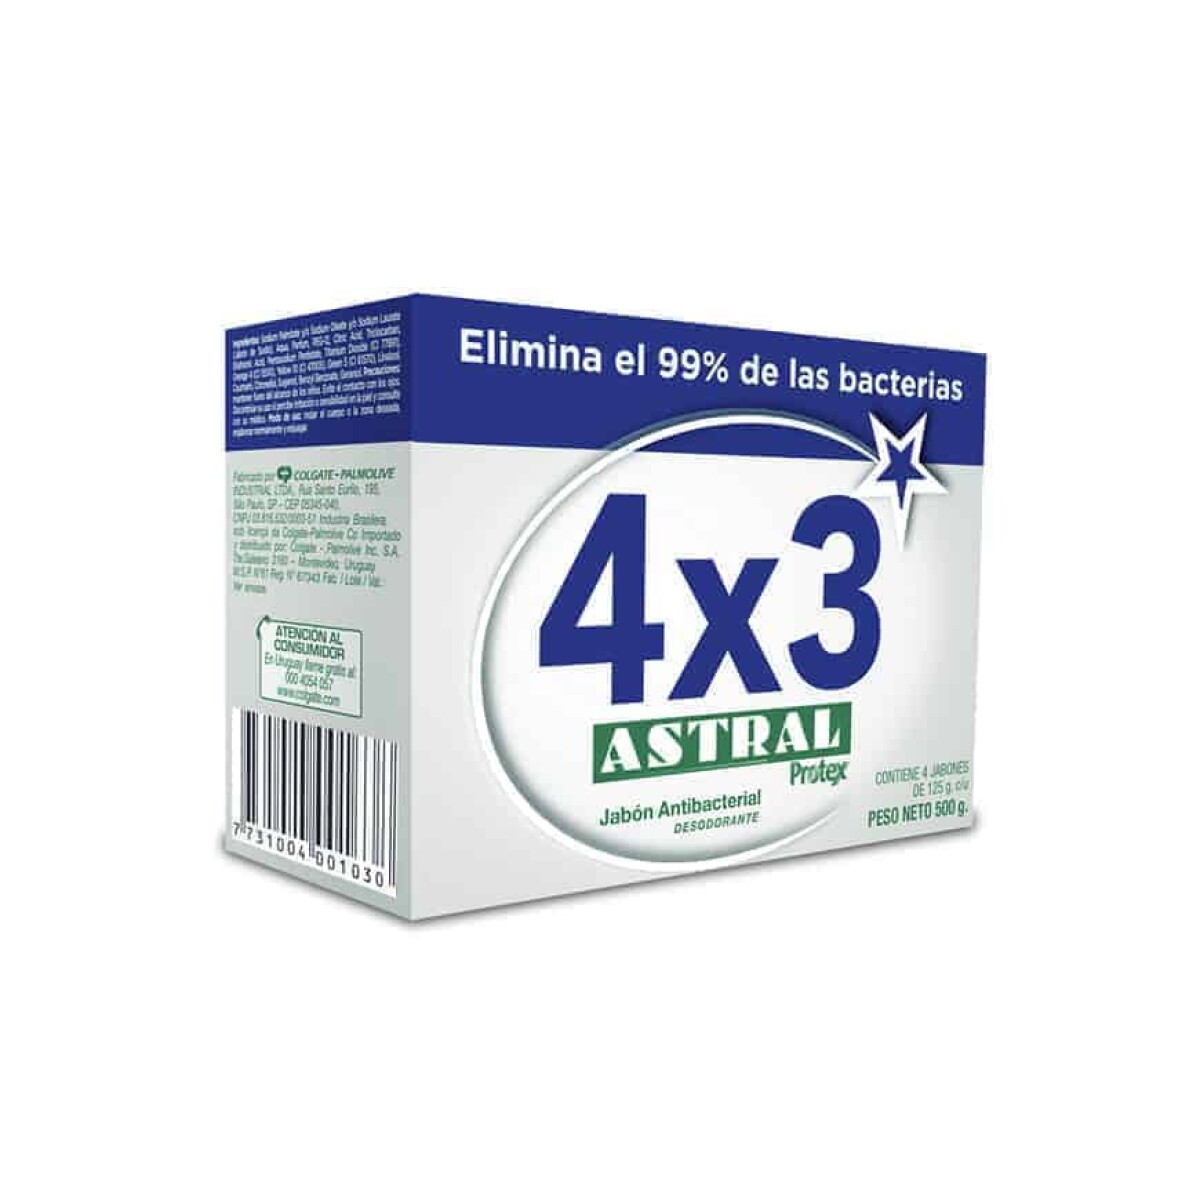 Astral Jabon Plata Pack 4X3 